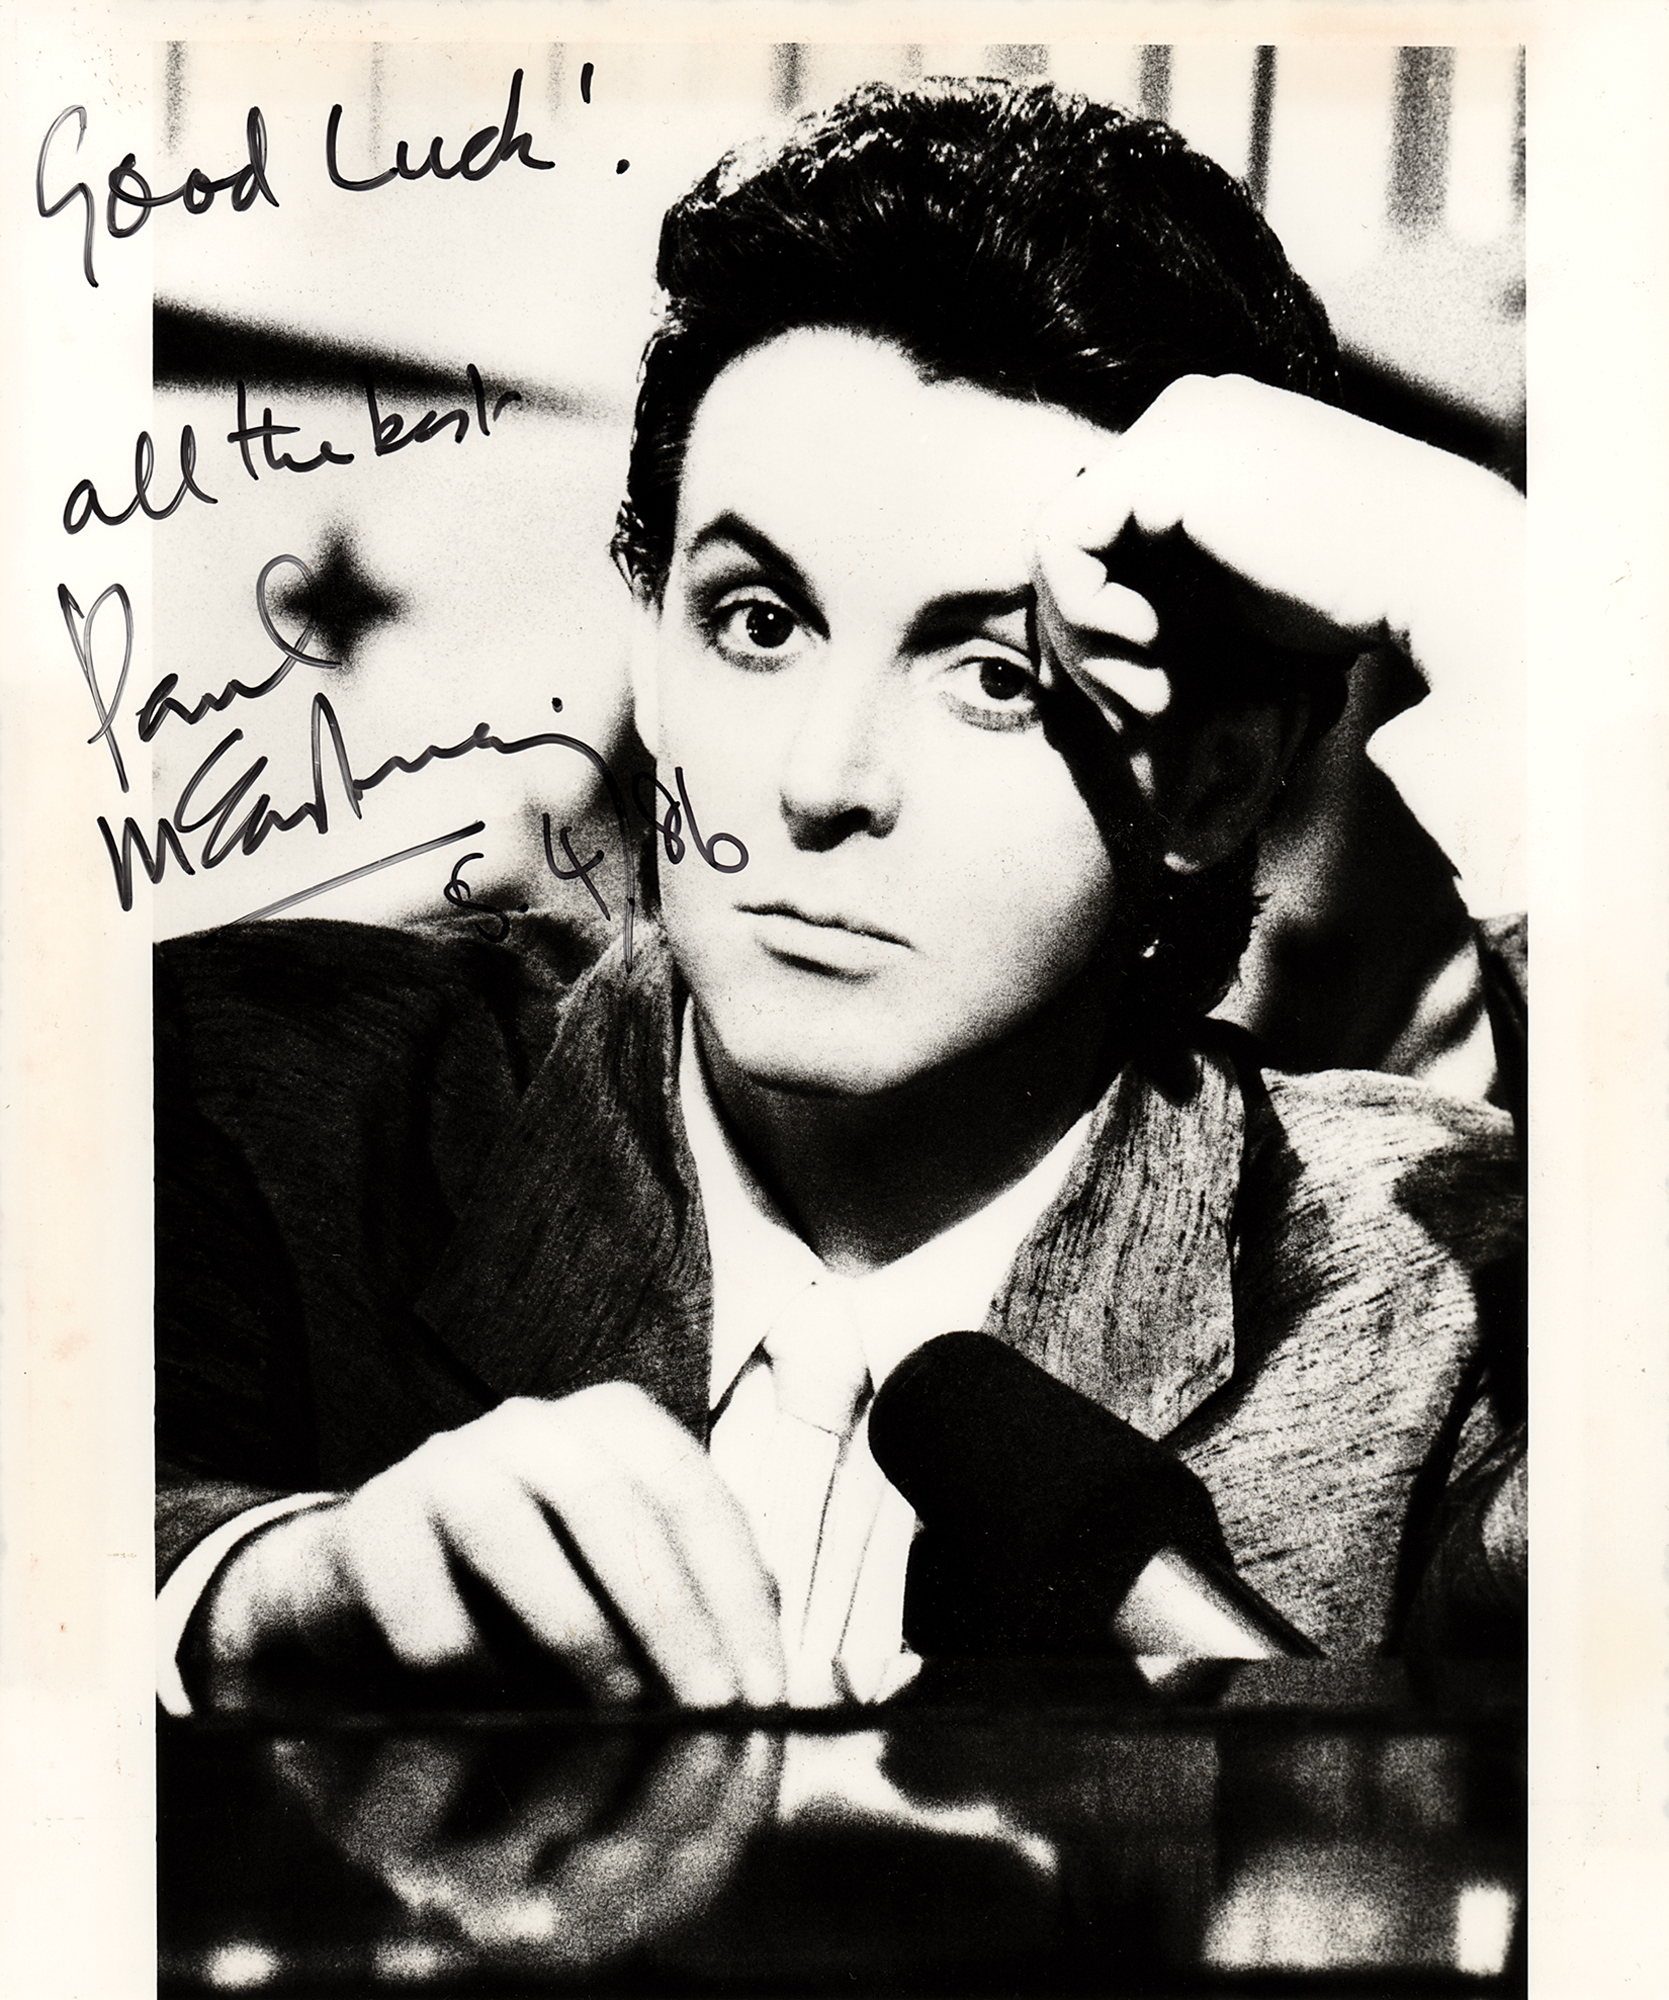 Lot #528 Beatles: Paul McCartney Signed Photograph